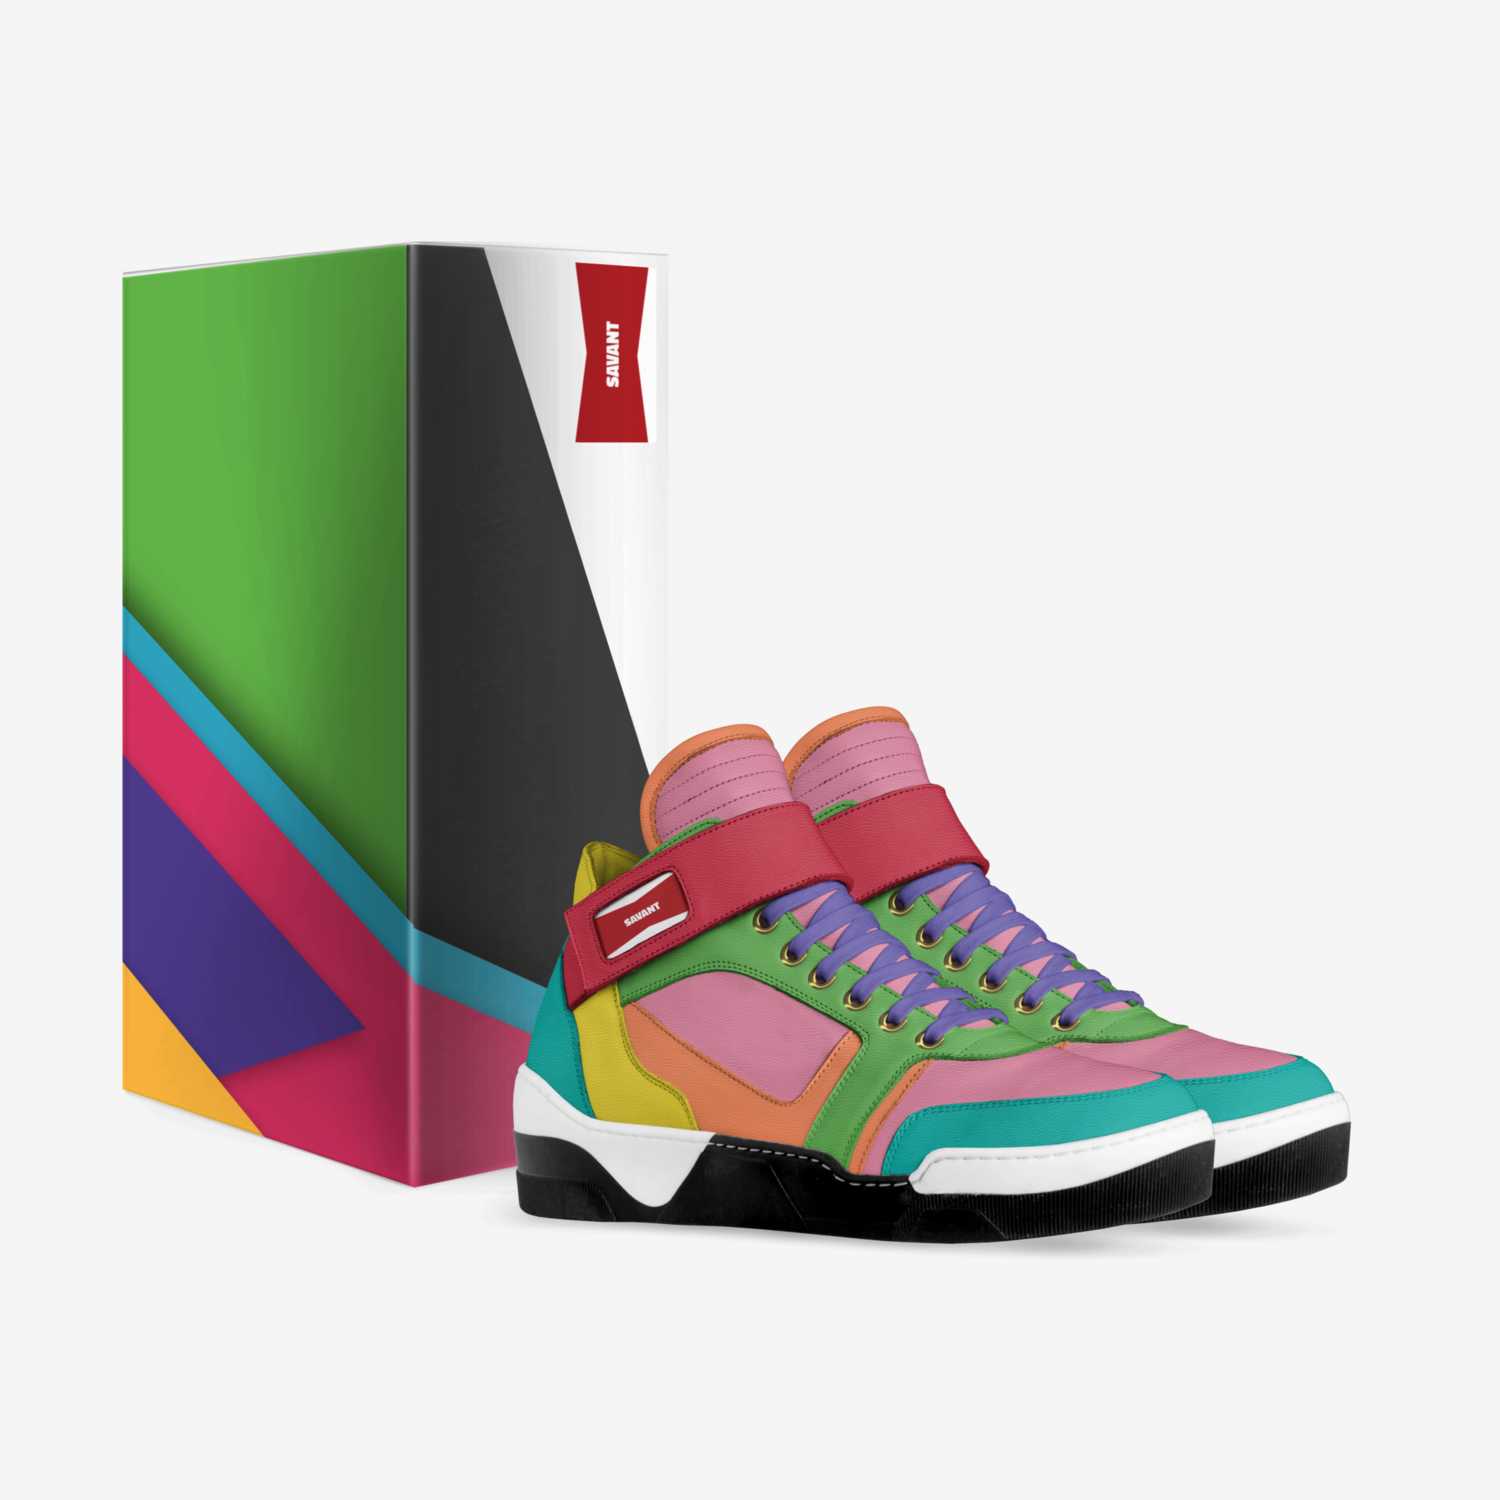 SAVANT custom made in Italy shoes by Eric Boler | Box view